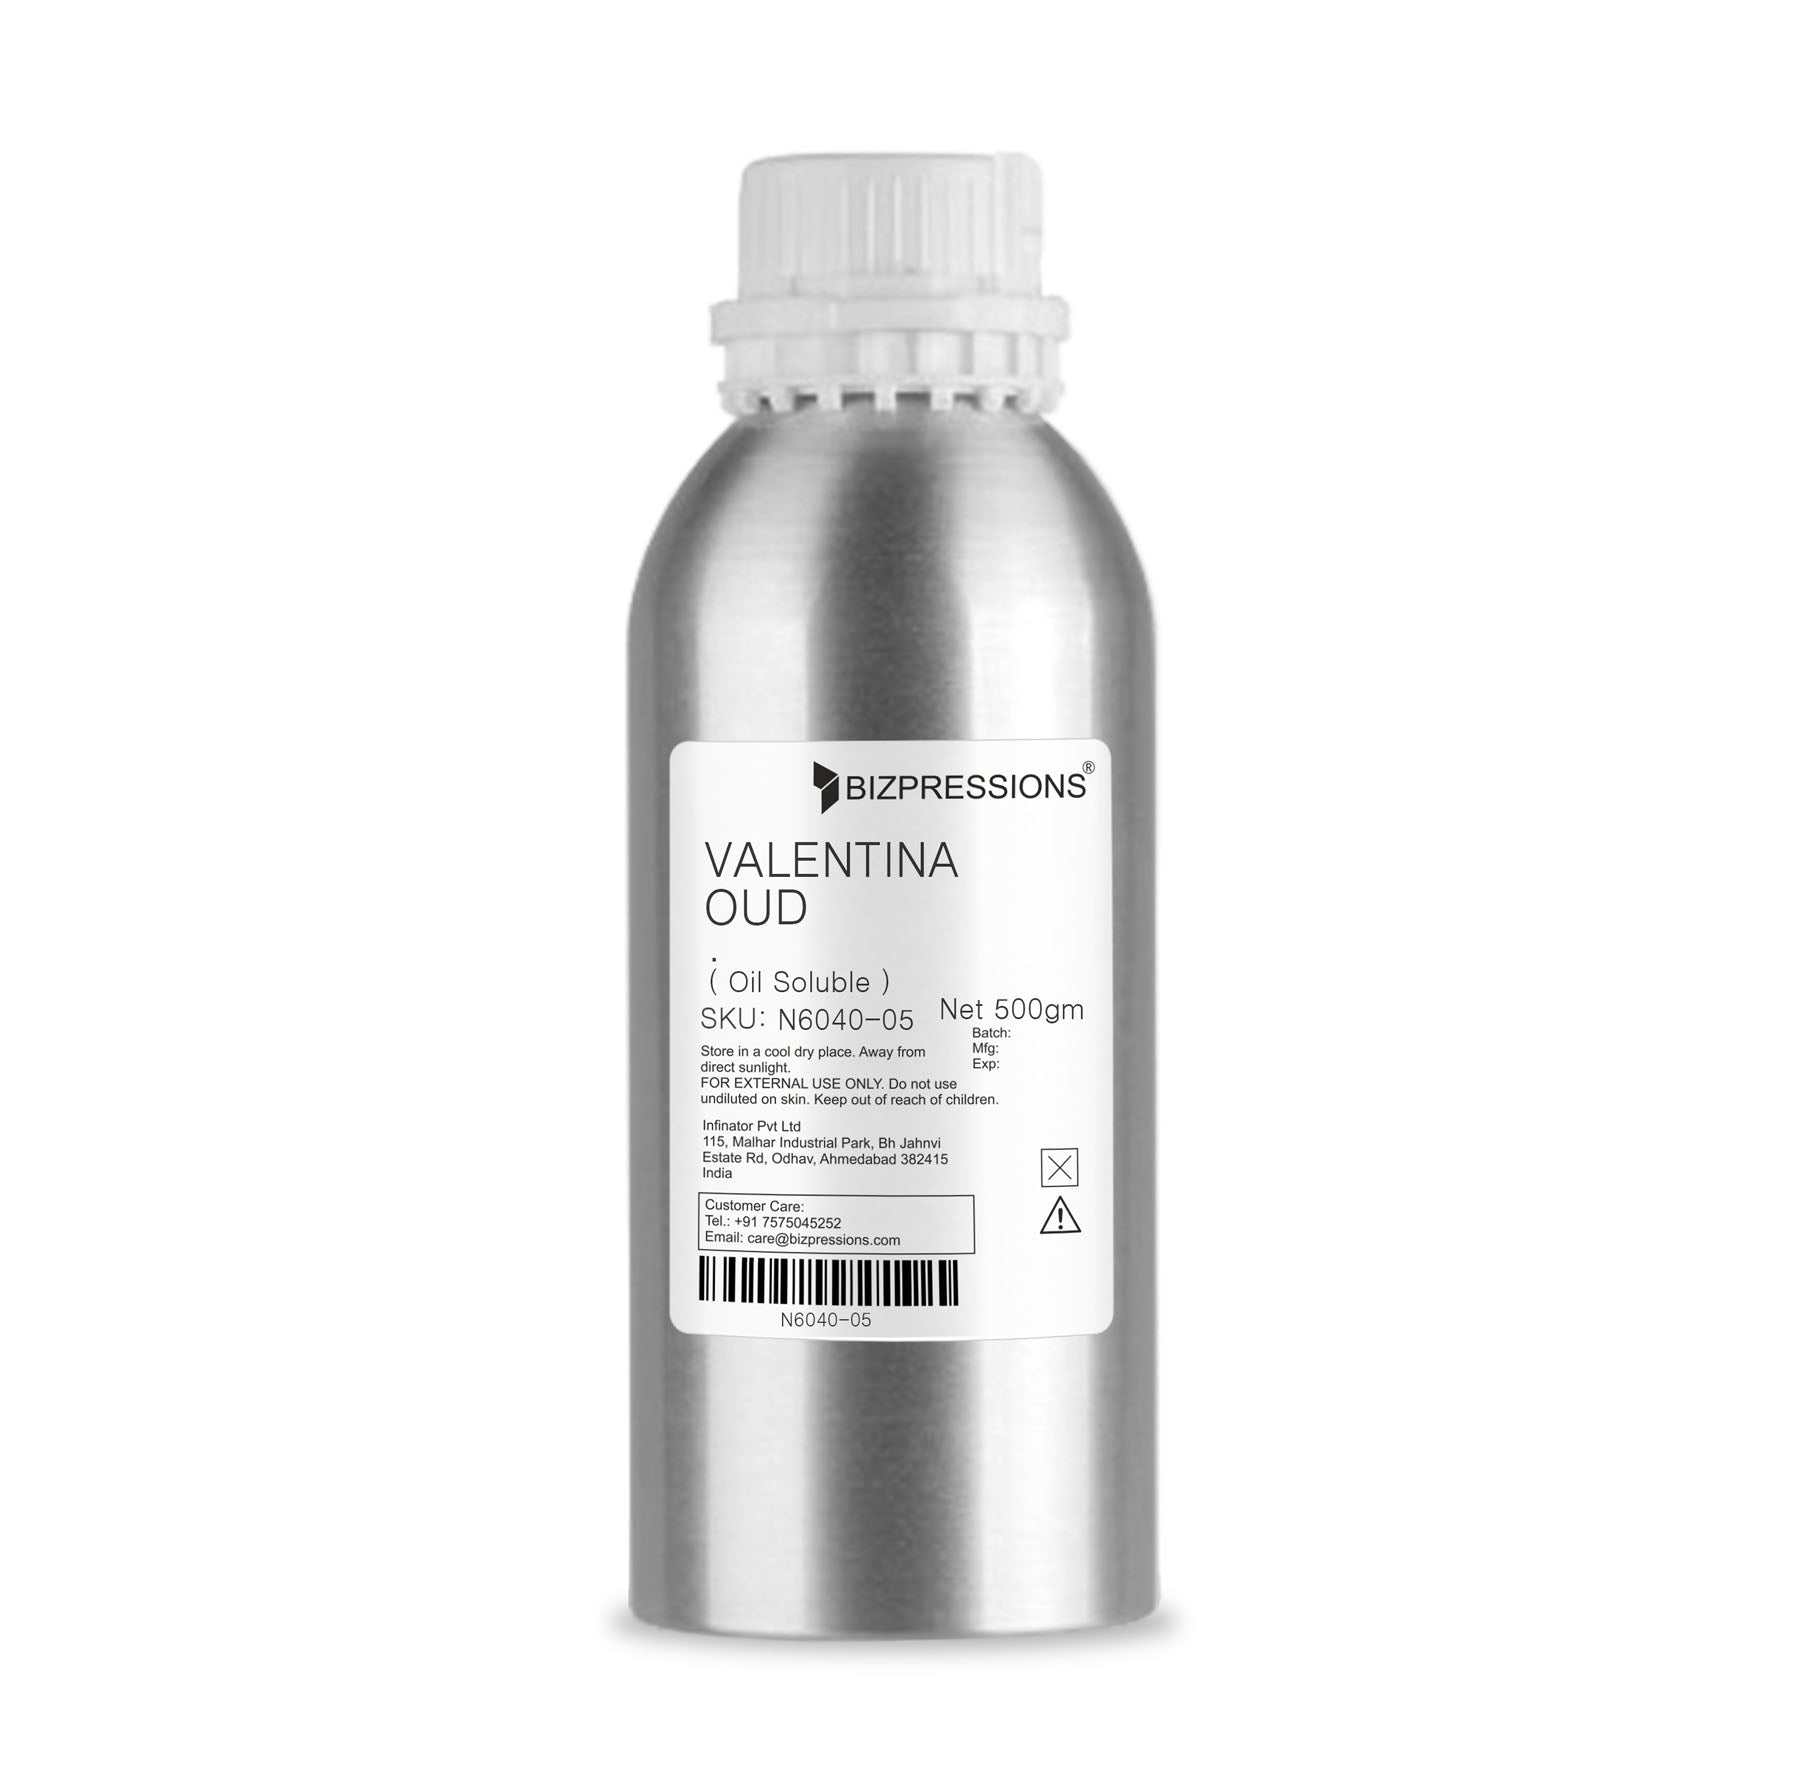 VALENTINA OUD - Fragrance ( Oil Soluble ) - 500 gm